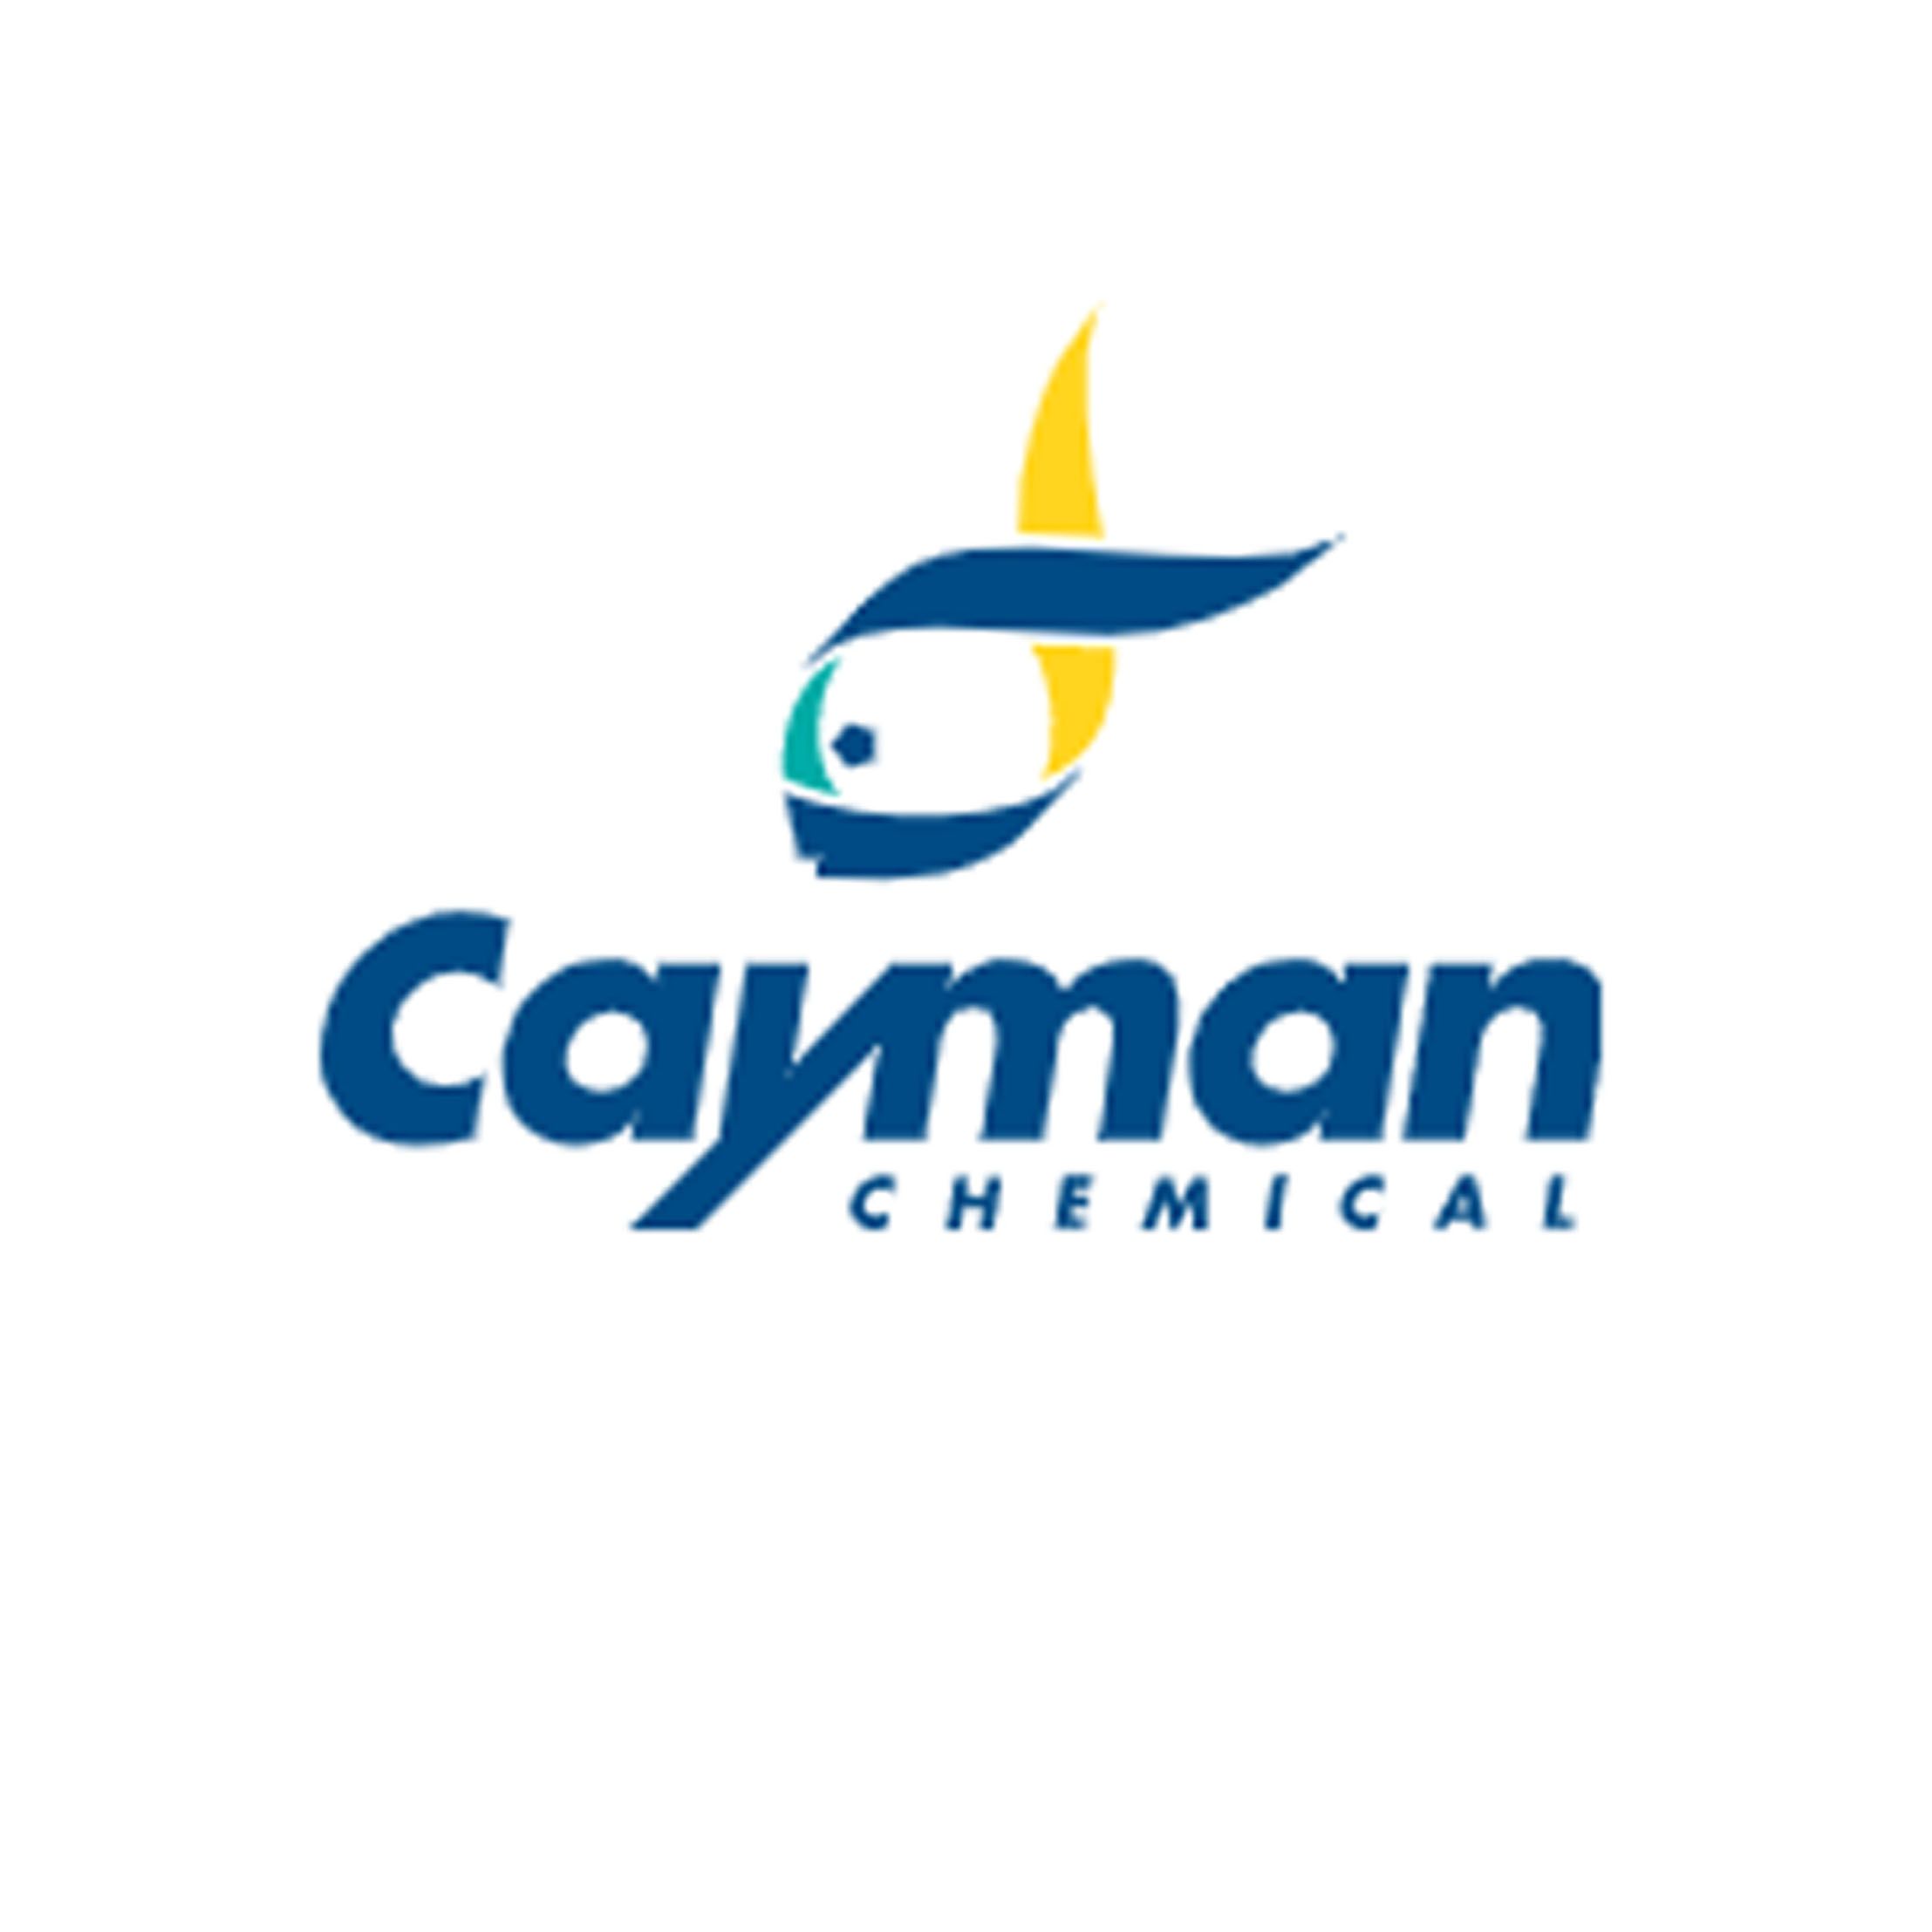 Cayman700260 Alanine Transaminase Colorimetric Activity Assay Kit，丙氨酸转氨酶比色活性测定试剂盒，96次分析,现货